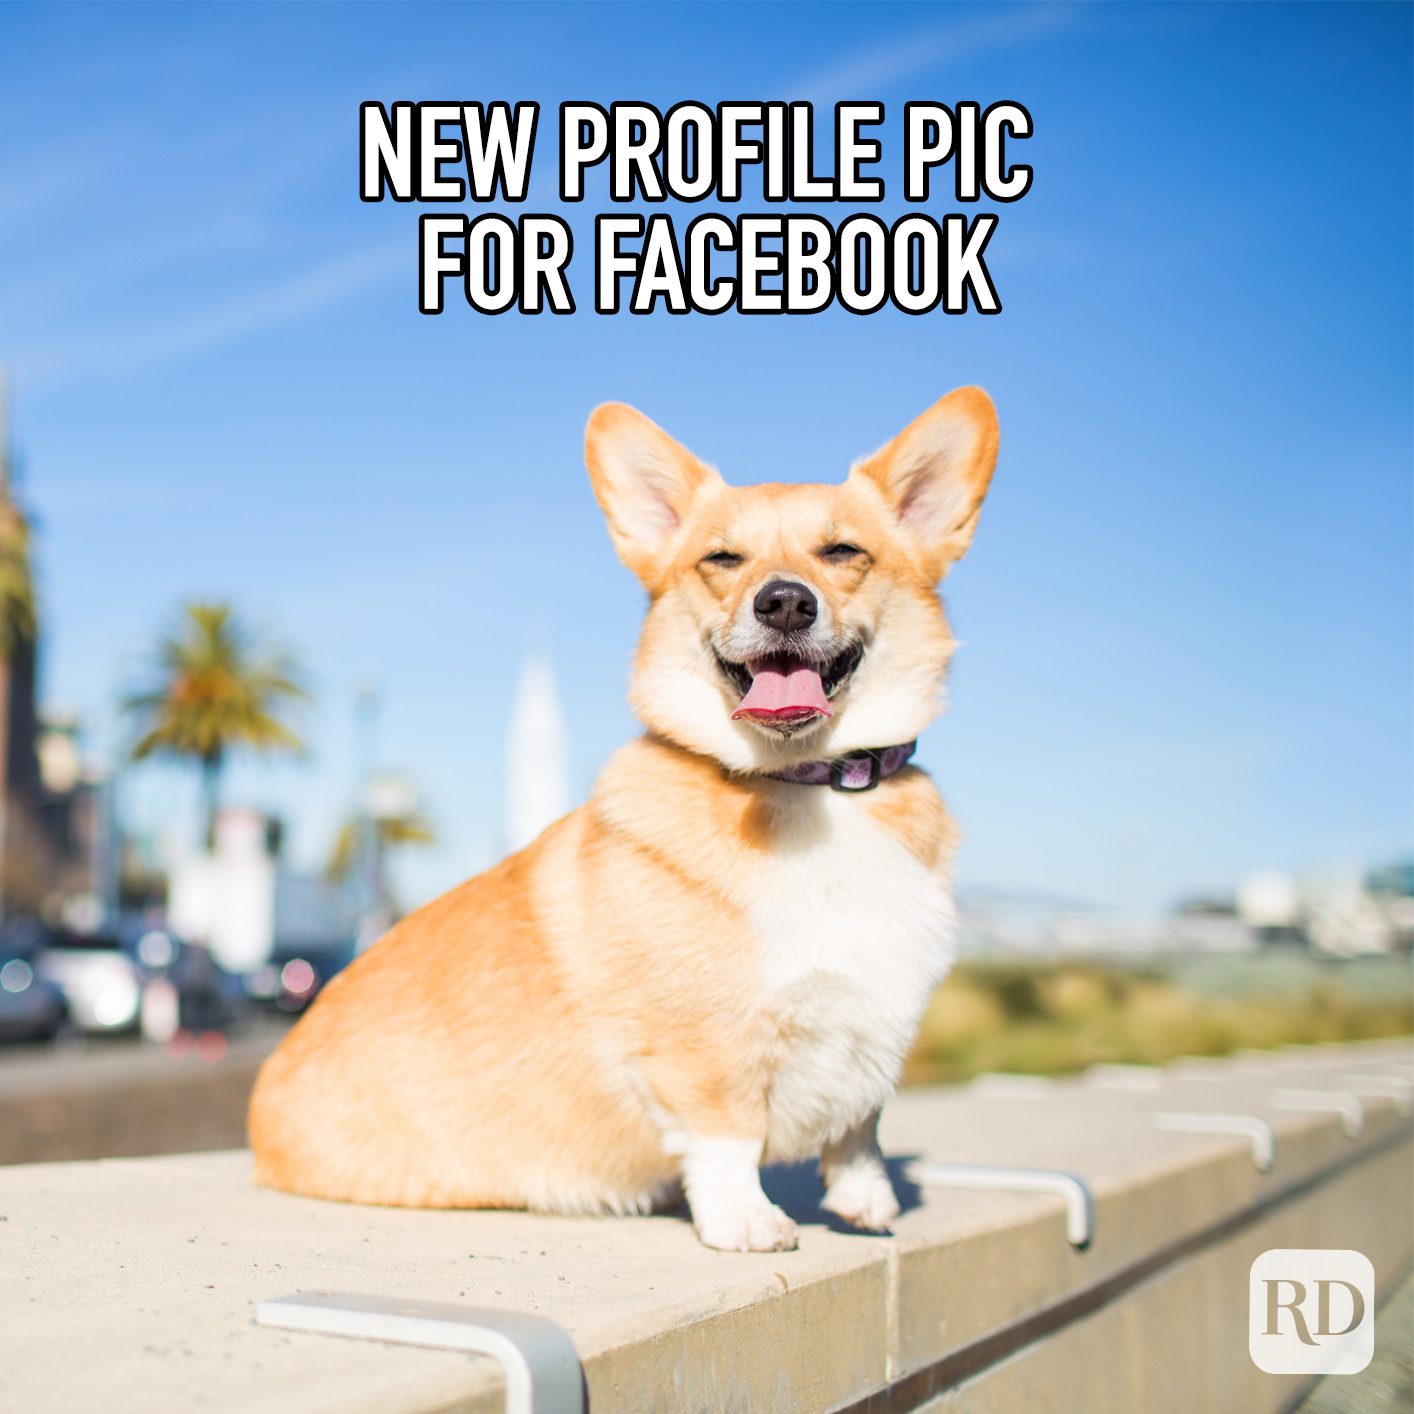 New Profile Pic For Facebook meme text over corgi looking dapper